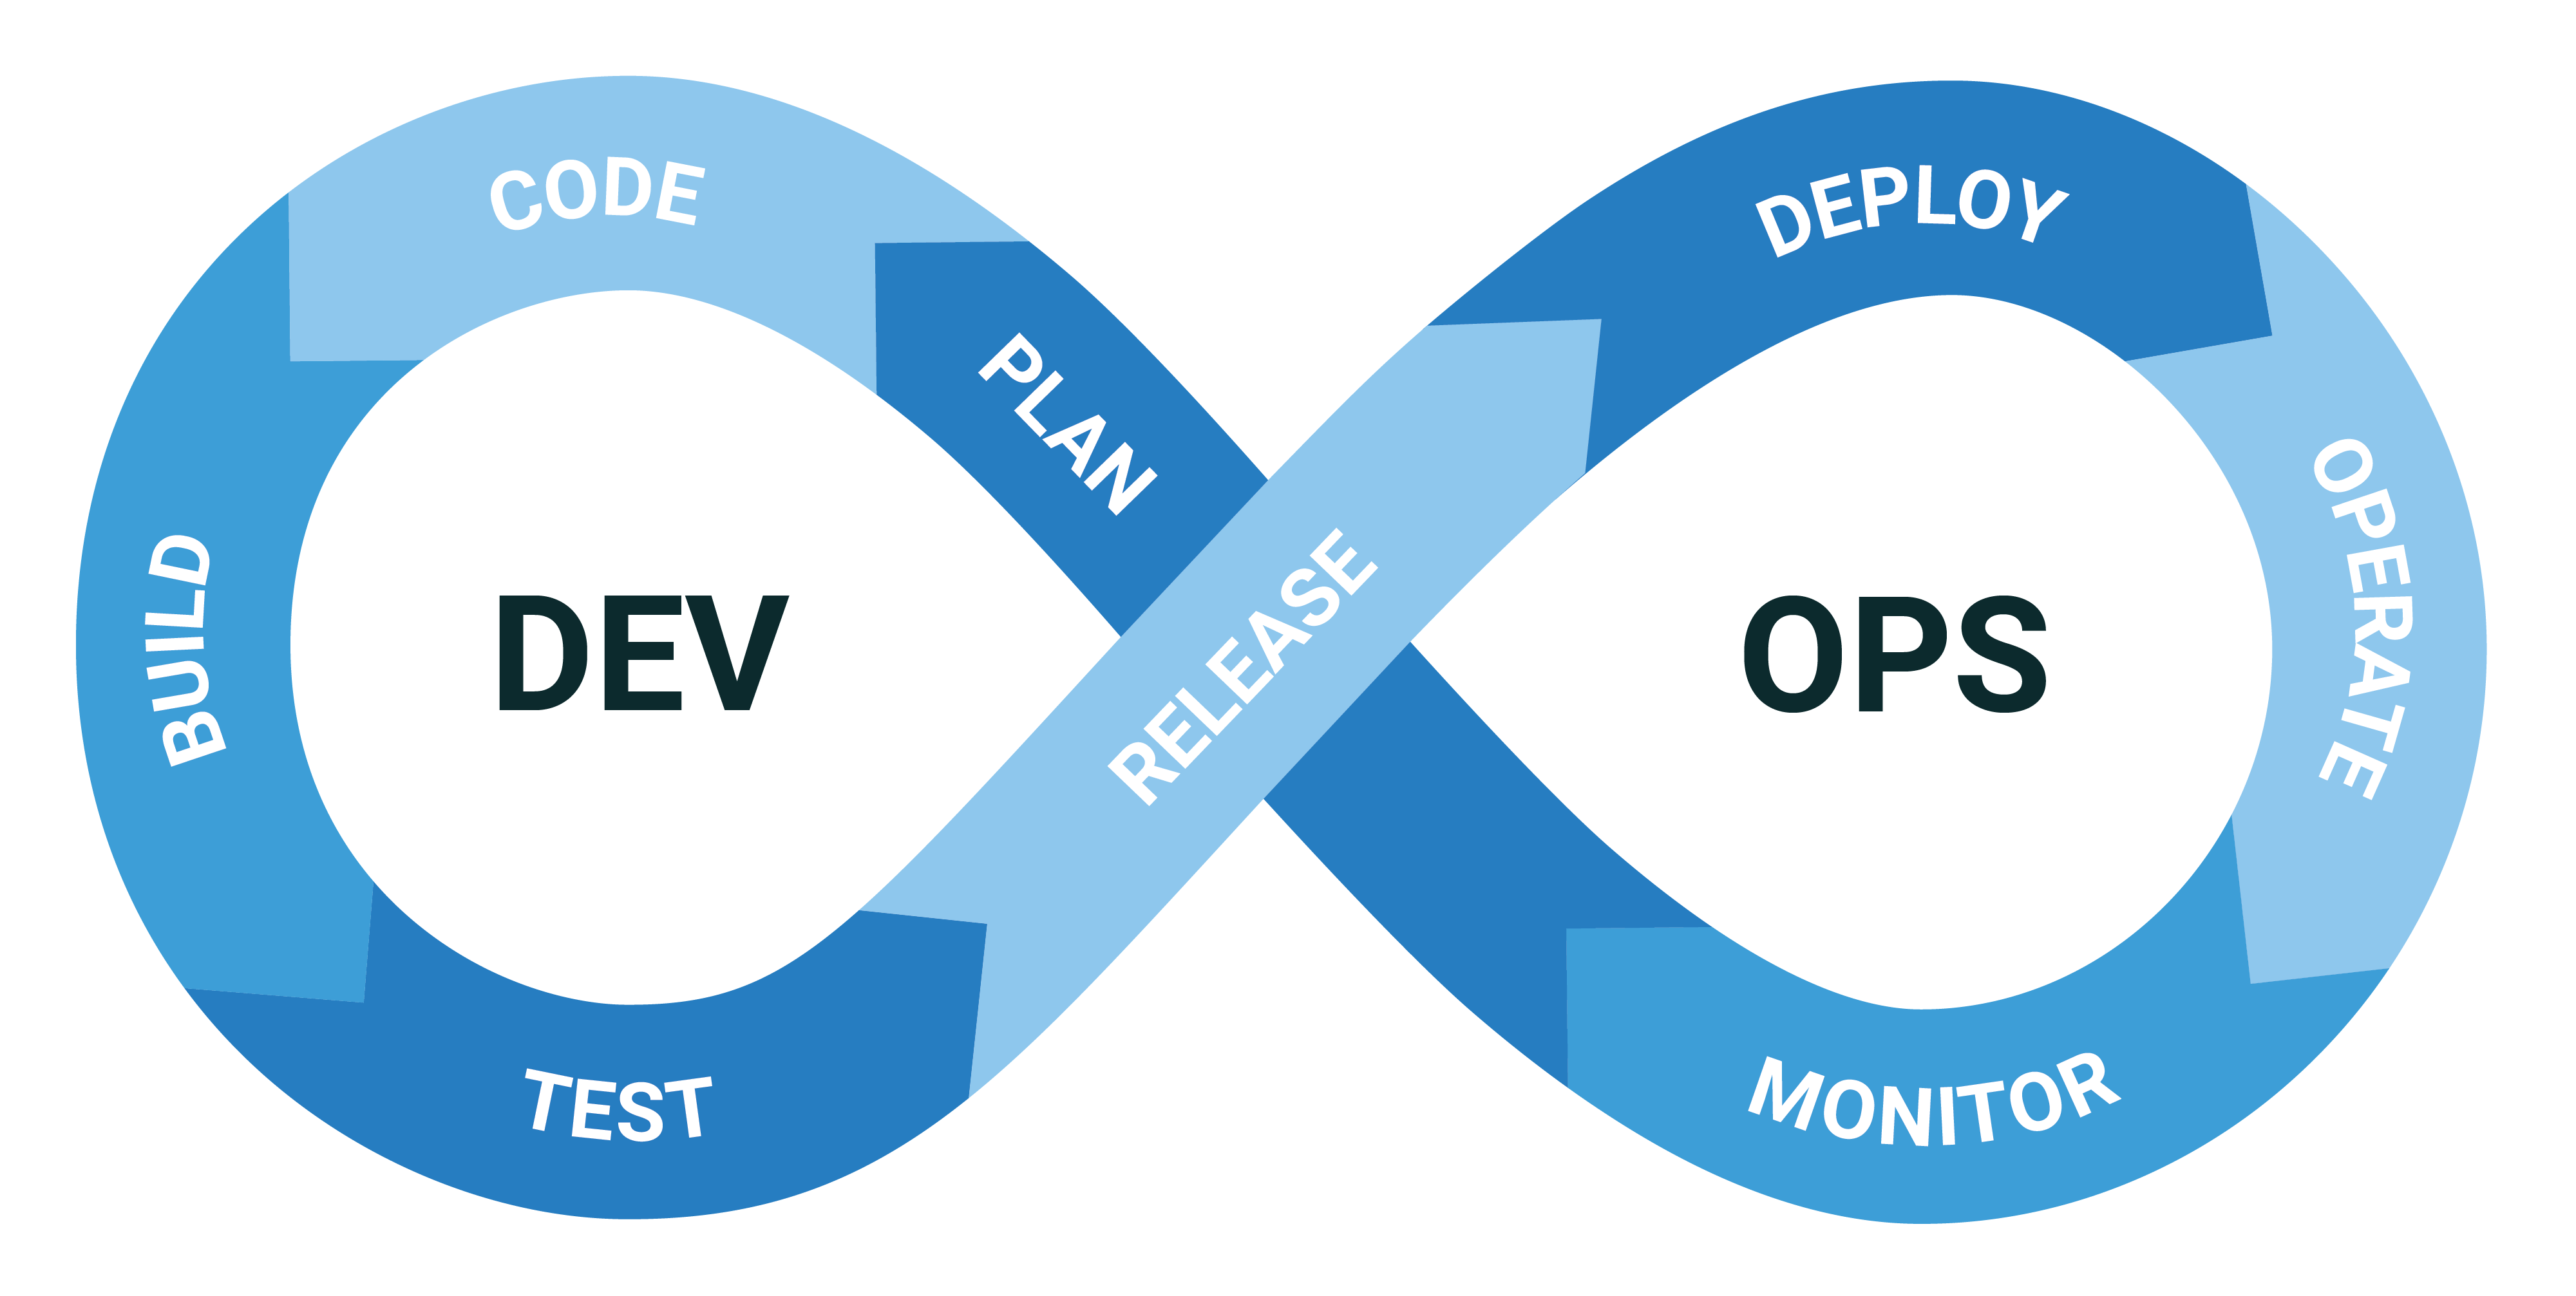 The DevOps infinity loop of plan, code, build, test, release, deploy, operate, monitor, repeat.